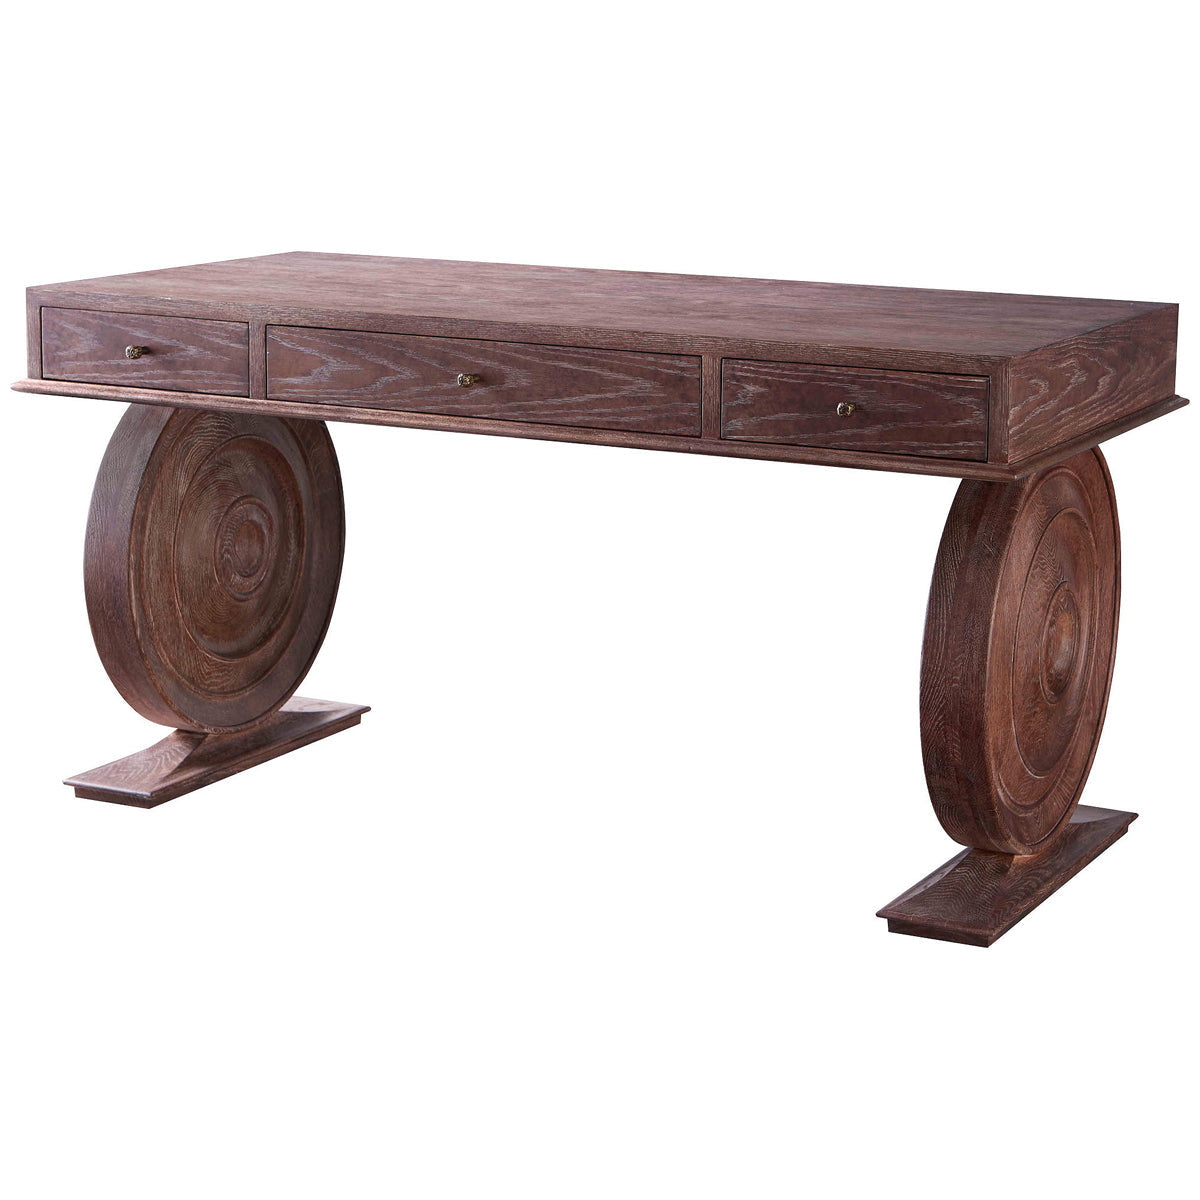 Baker Furniture Hemingway Desk MR8488